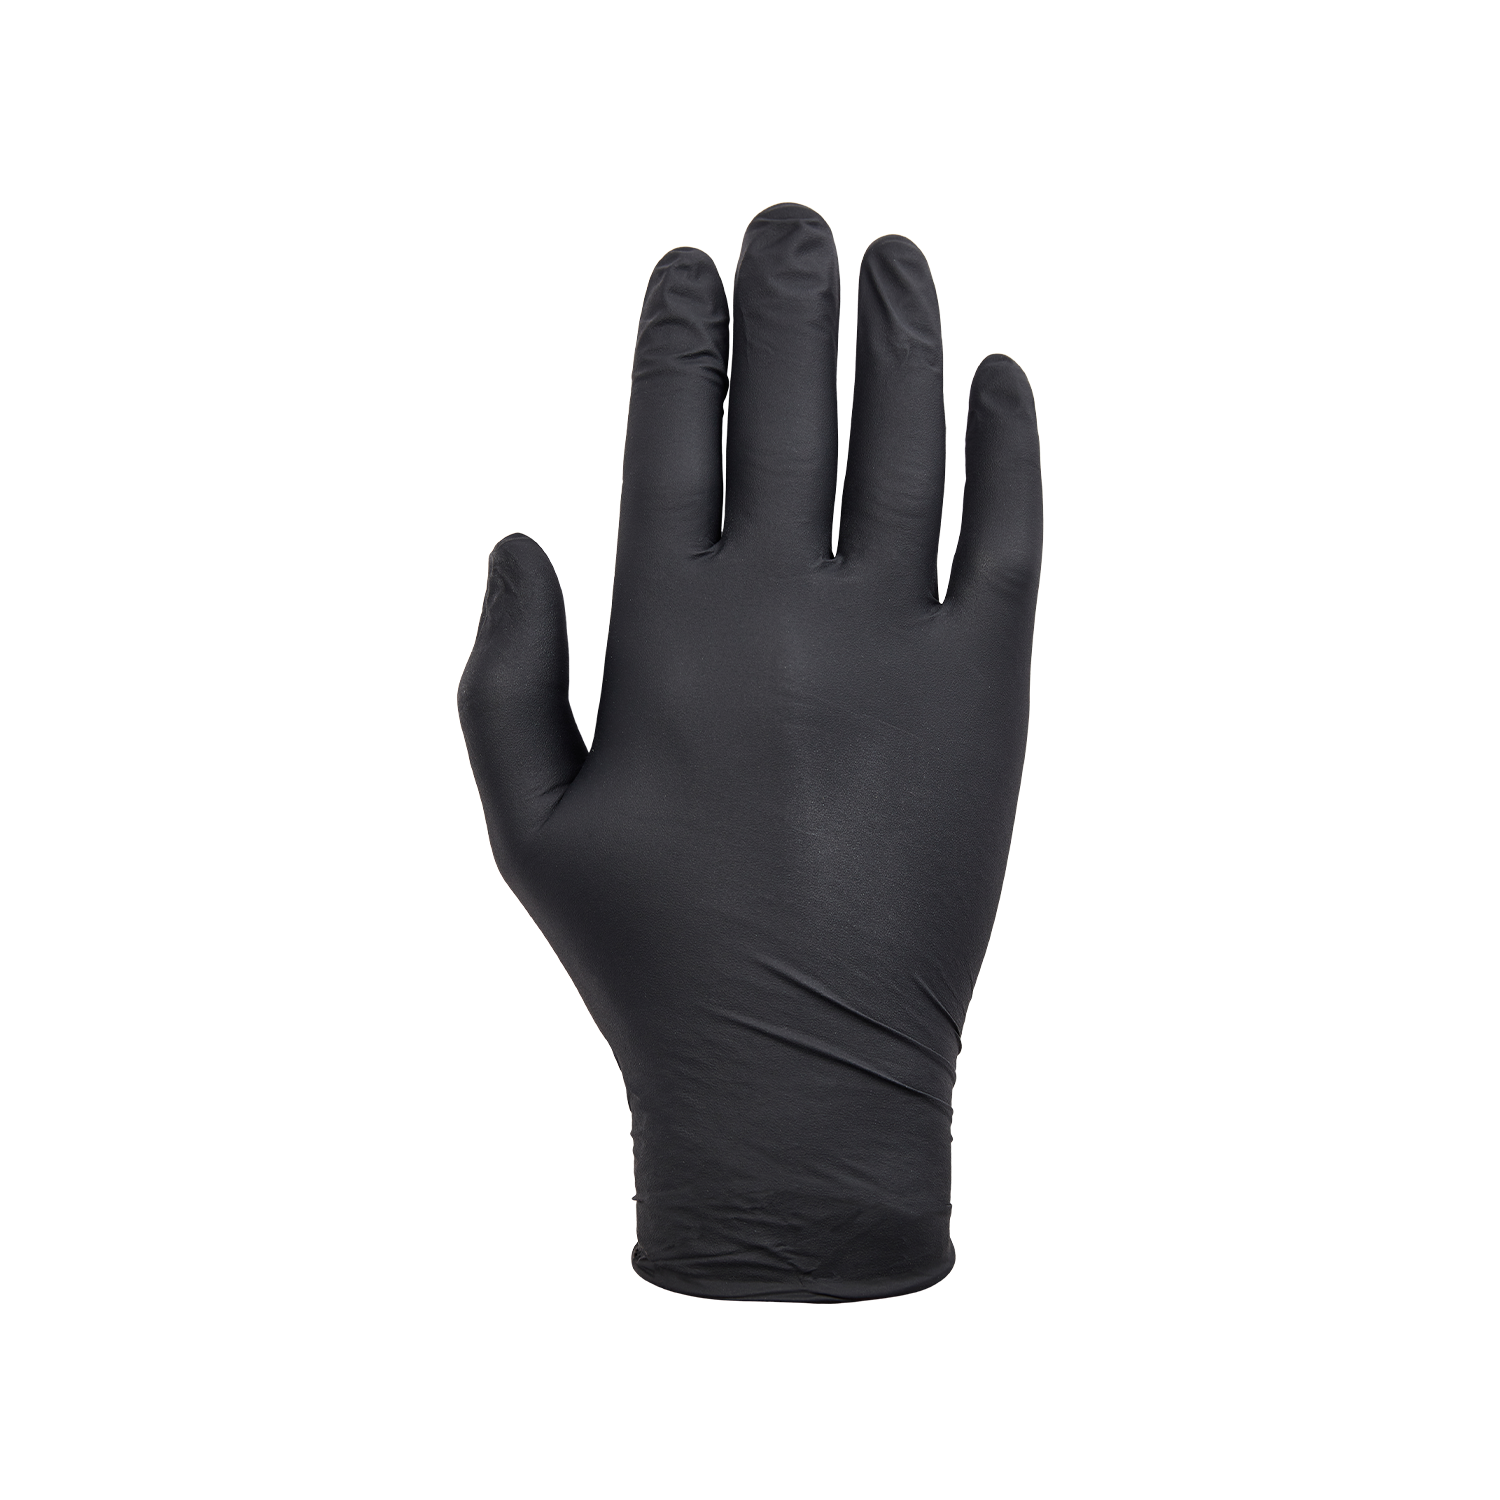 NORSE Disposable Black Black disposable nitrile gloves - Size 10/XL